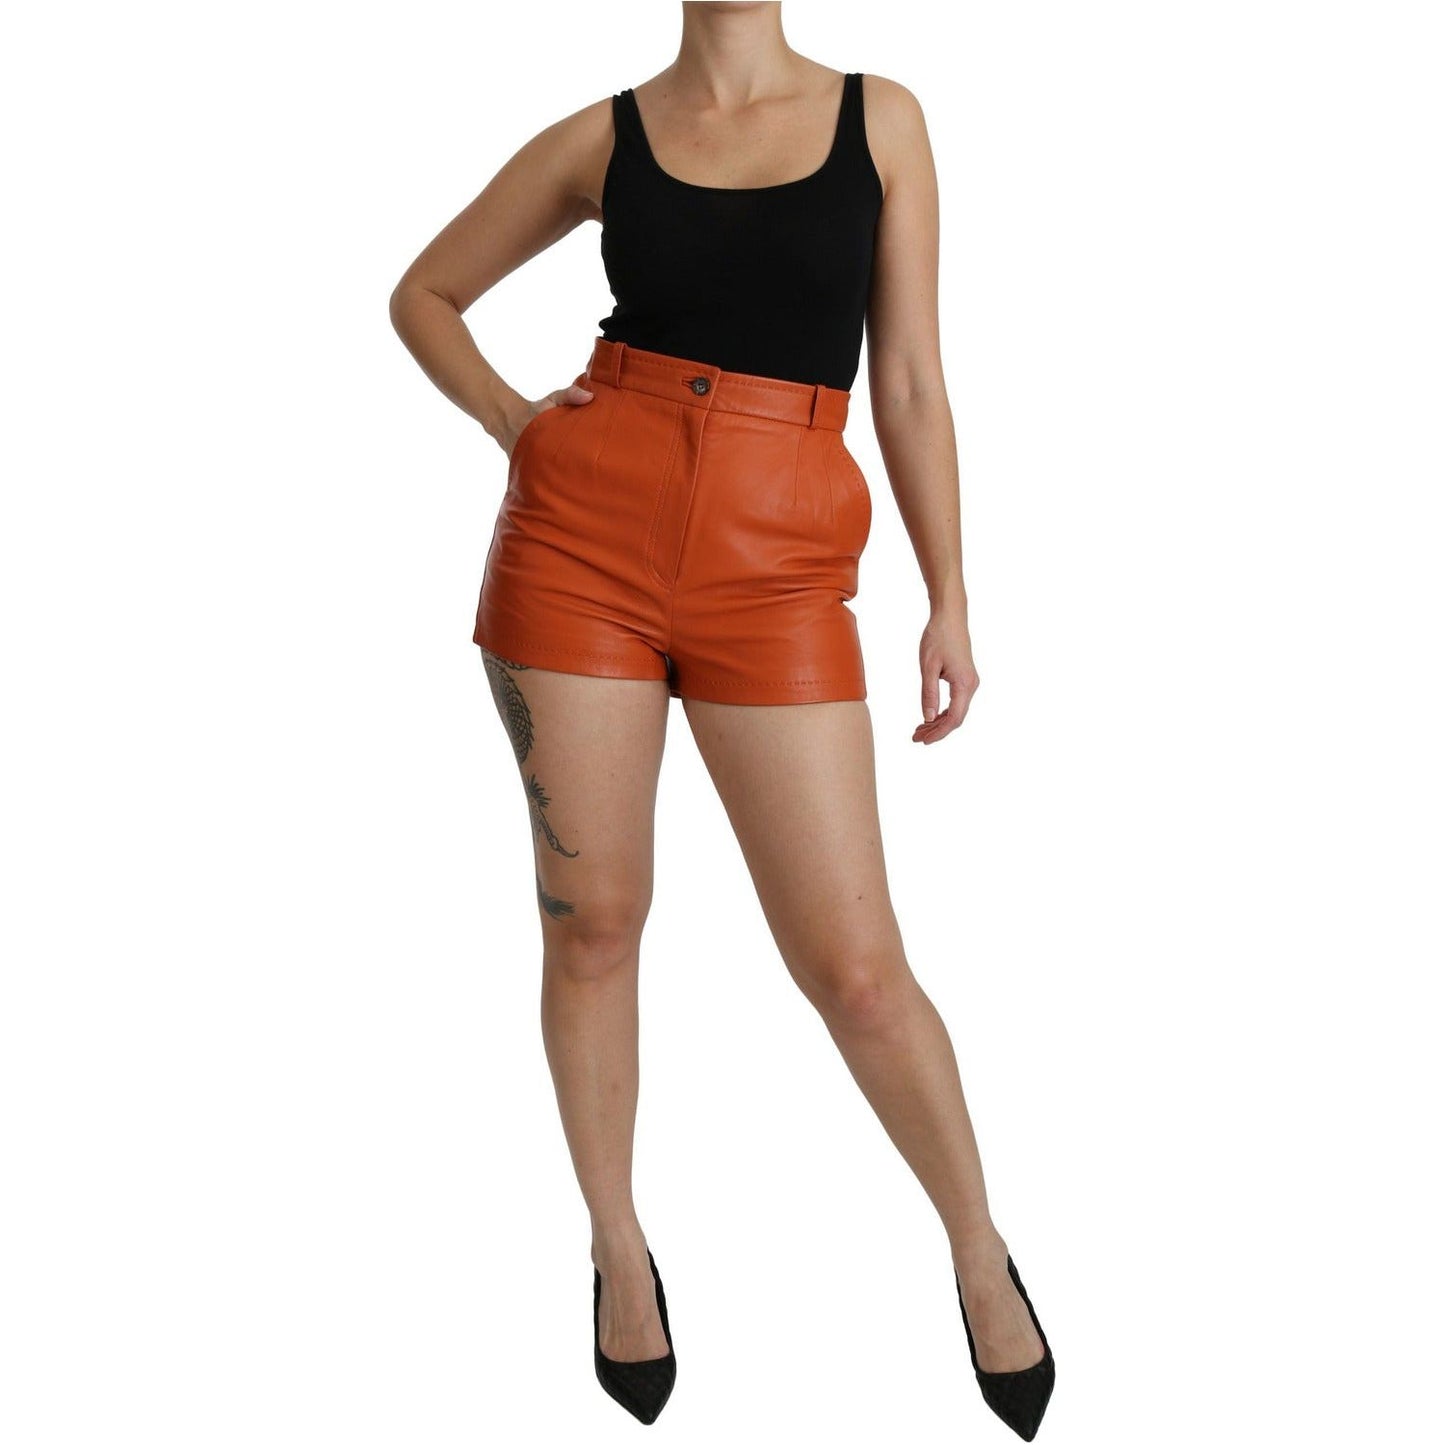 Dolce & Gabbana Chic Orange Leather High Waist Hot Pants Shorts orange-leather-high-waist-hot-pants-shorts IMG_2960-2-scaled-fde6a25e-f63.jpg